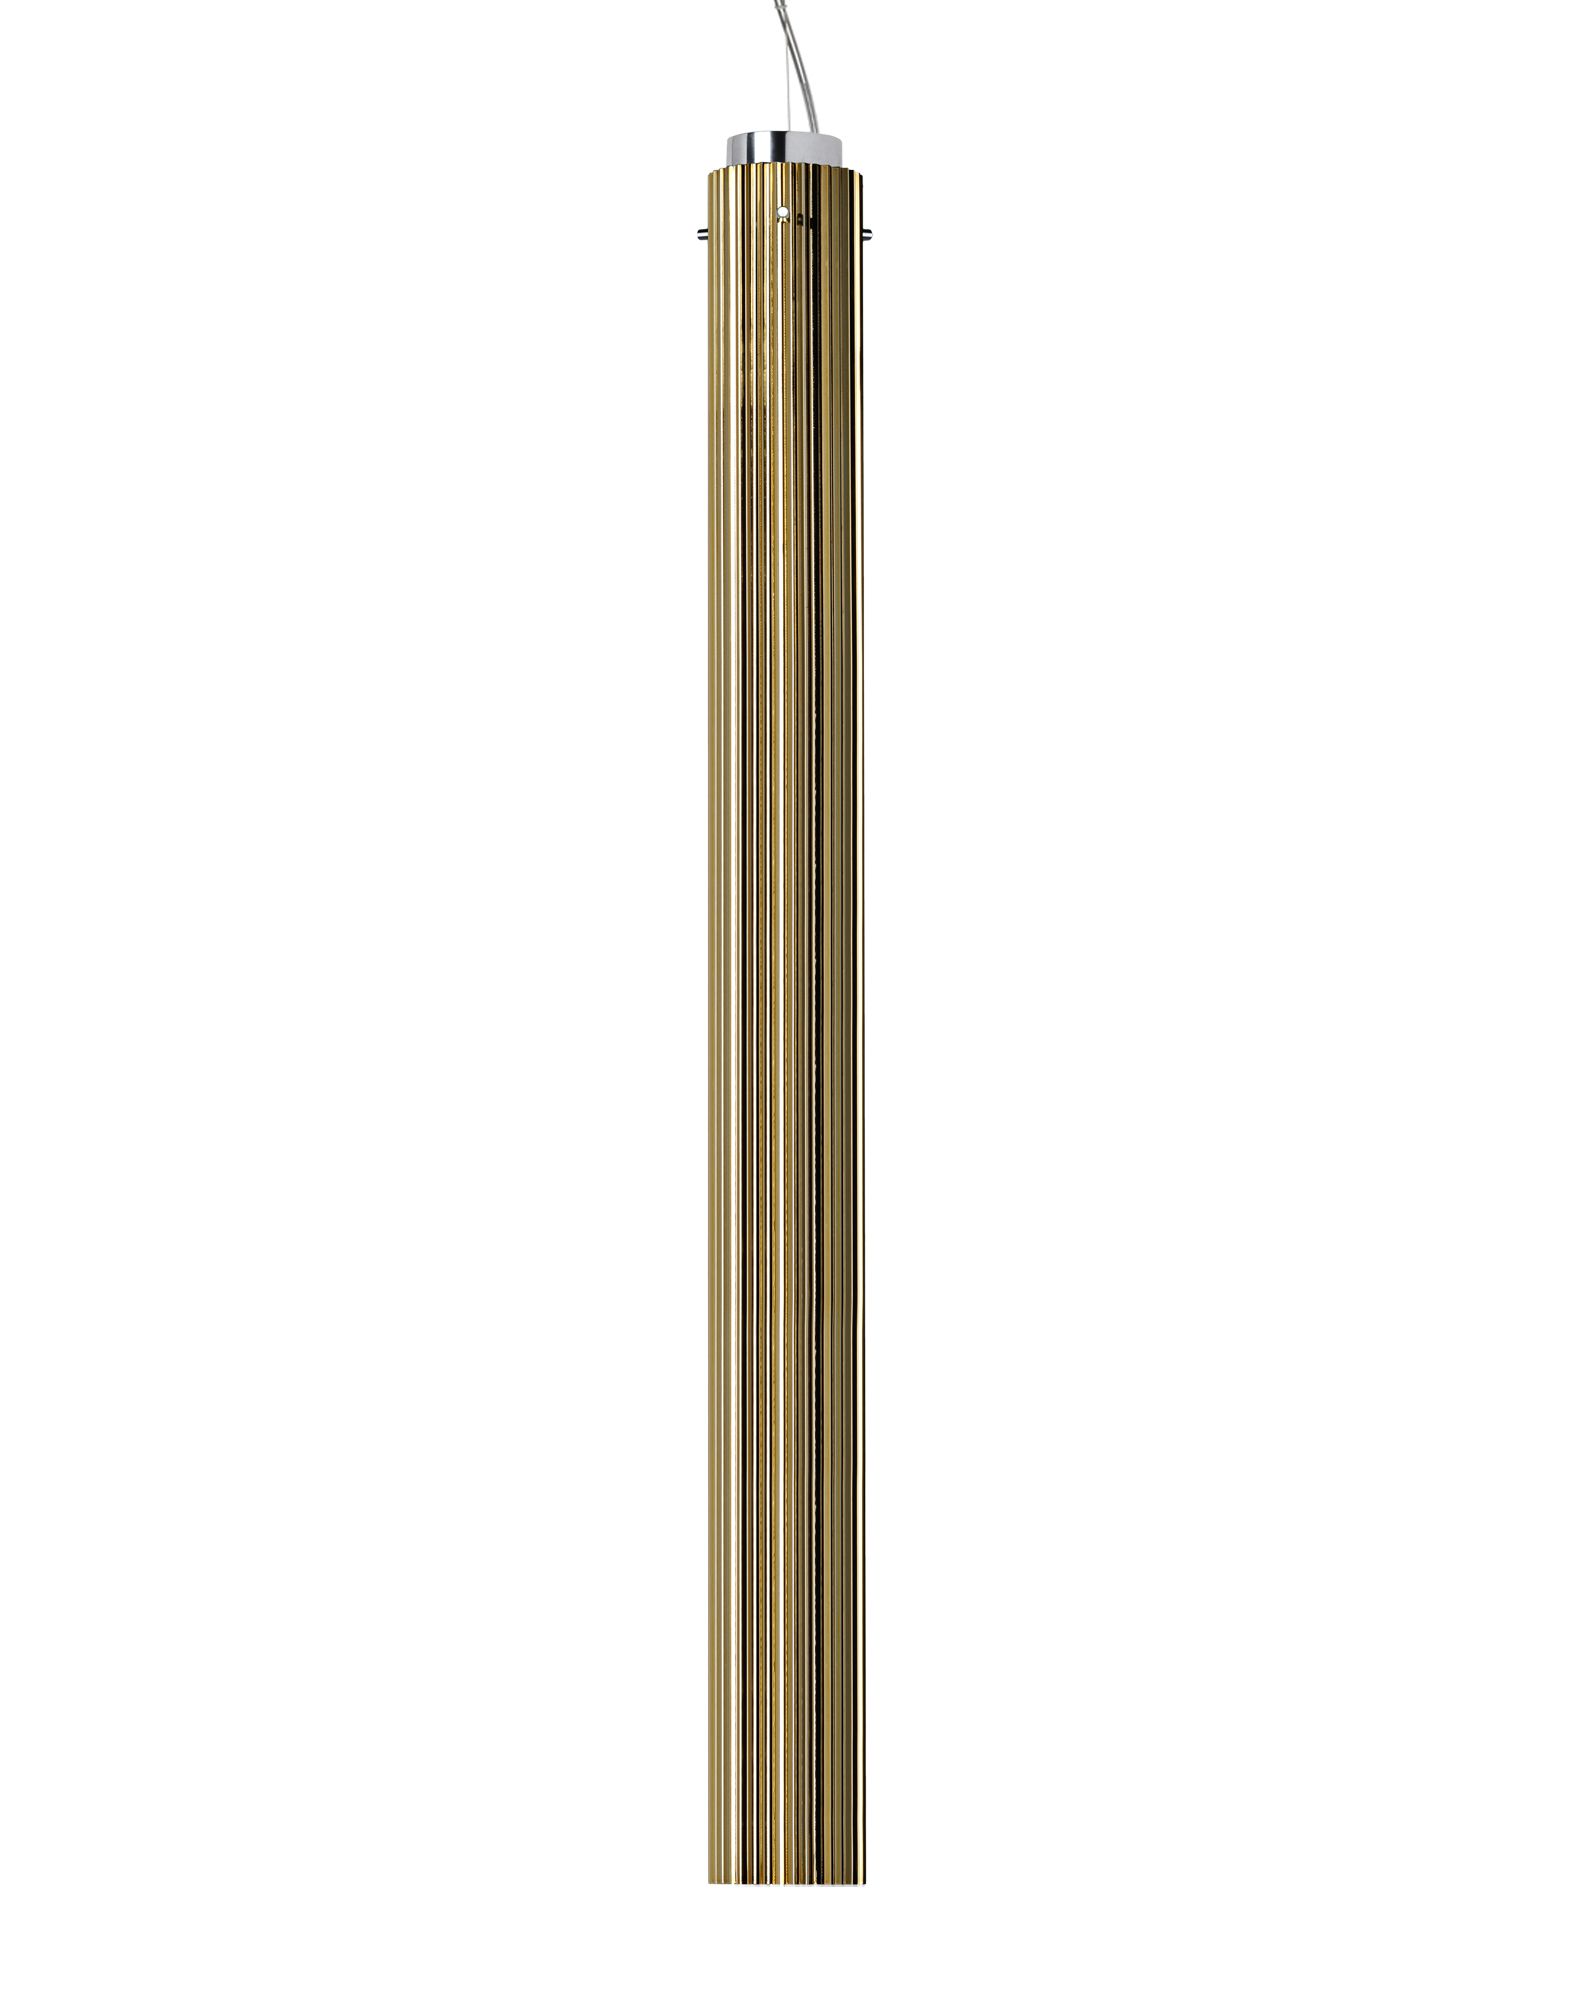 Suspensie Kartell by Laufen Rifly design Ludovica & Roberto Palomba LED 10W h90cm auriu metalizat Kartell by Laufen